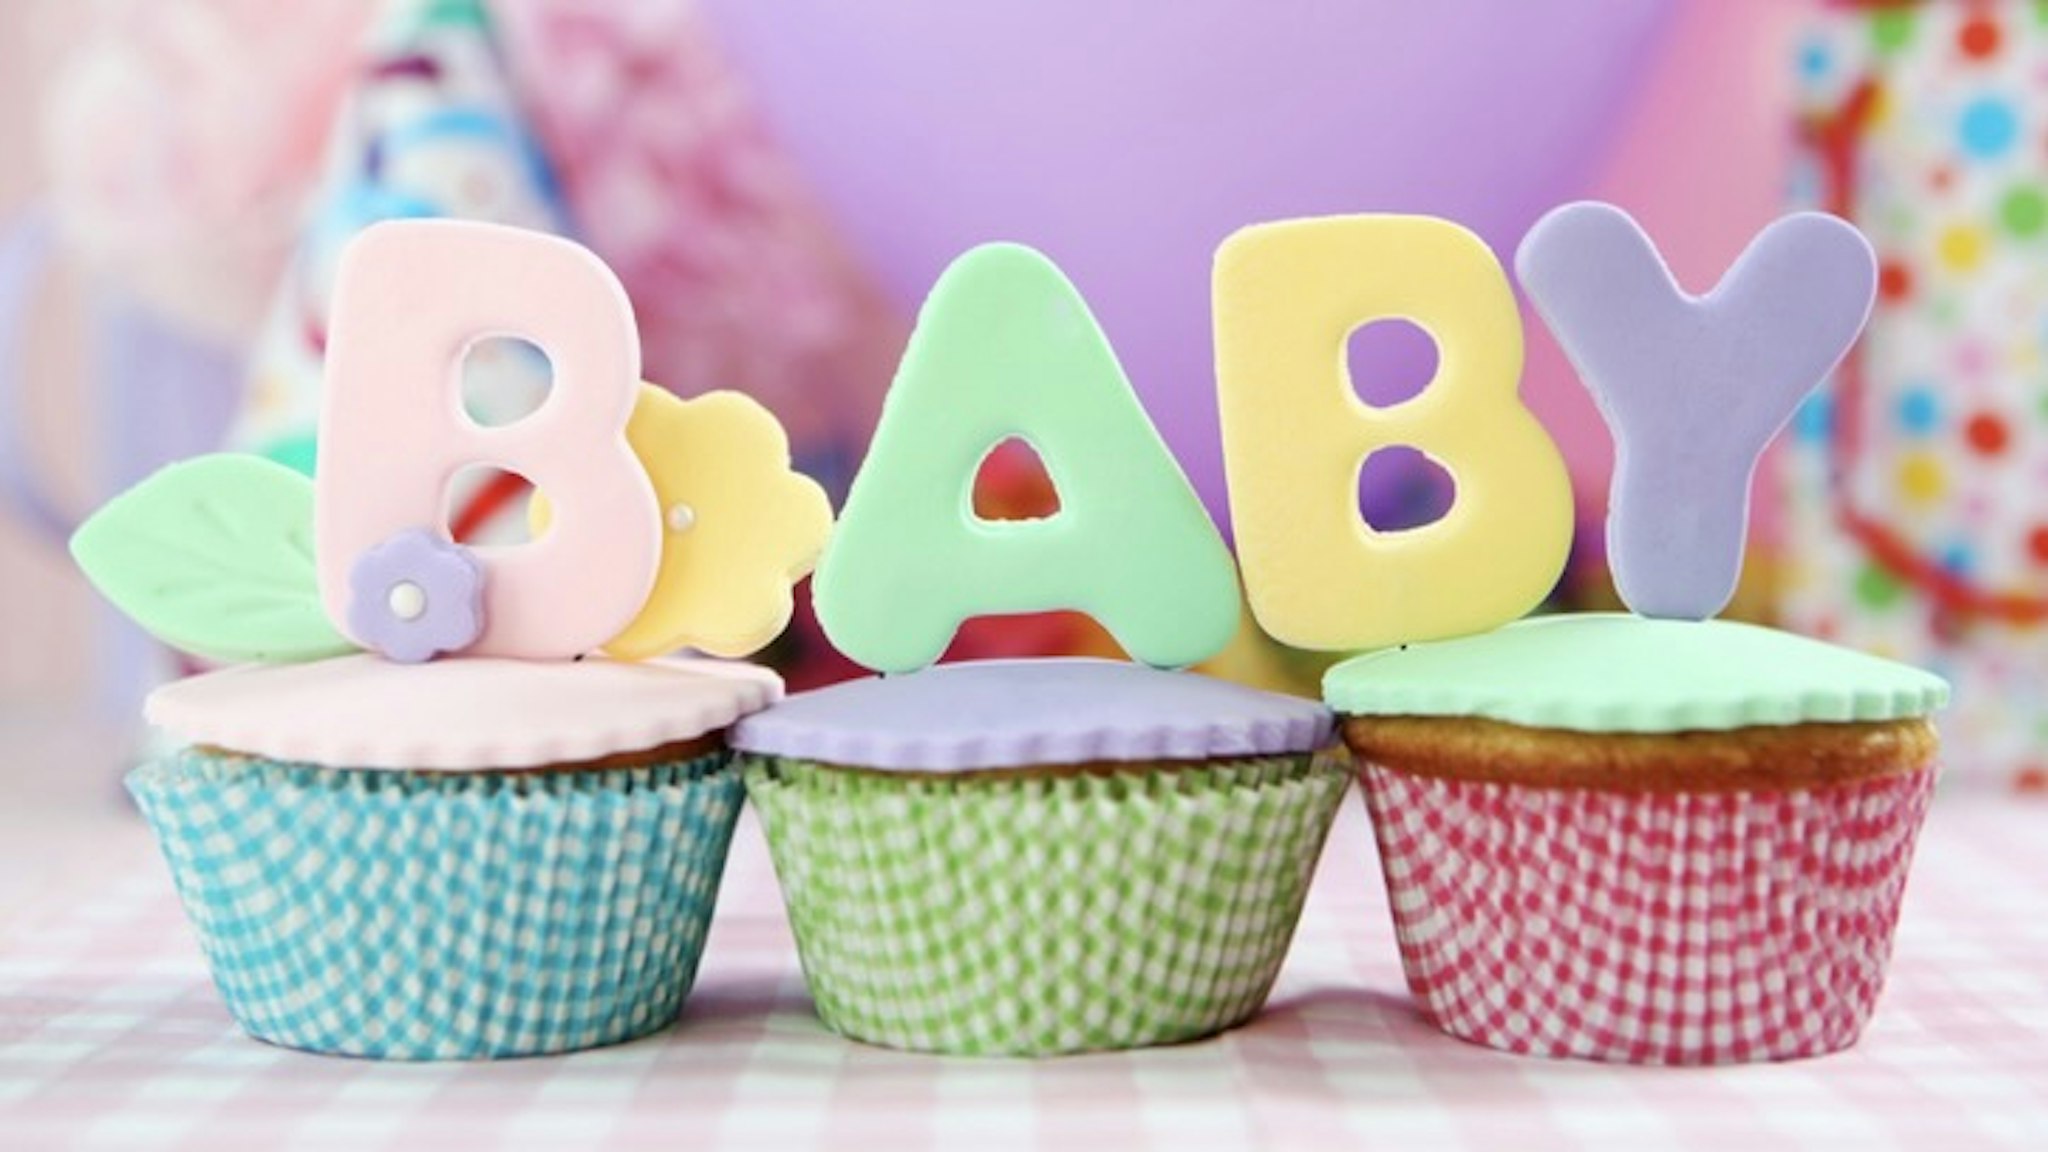 Baby cupcakes - stock photo Baby cupcakes kirin_photo via Getty Images